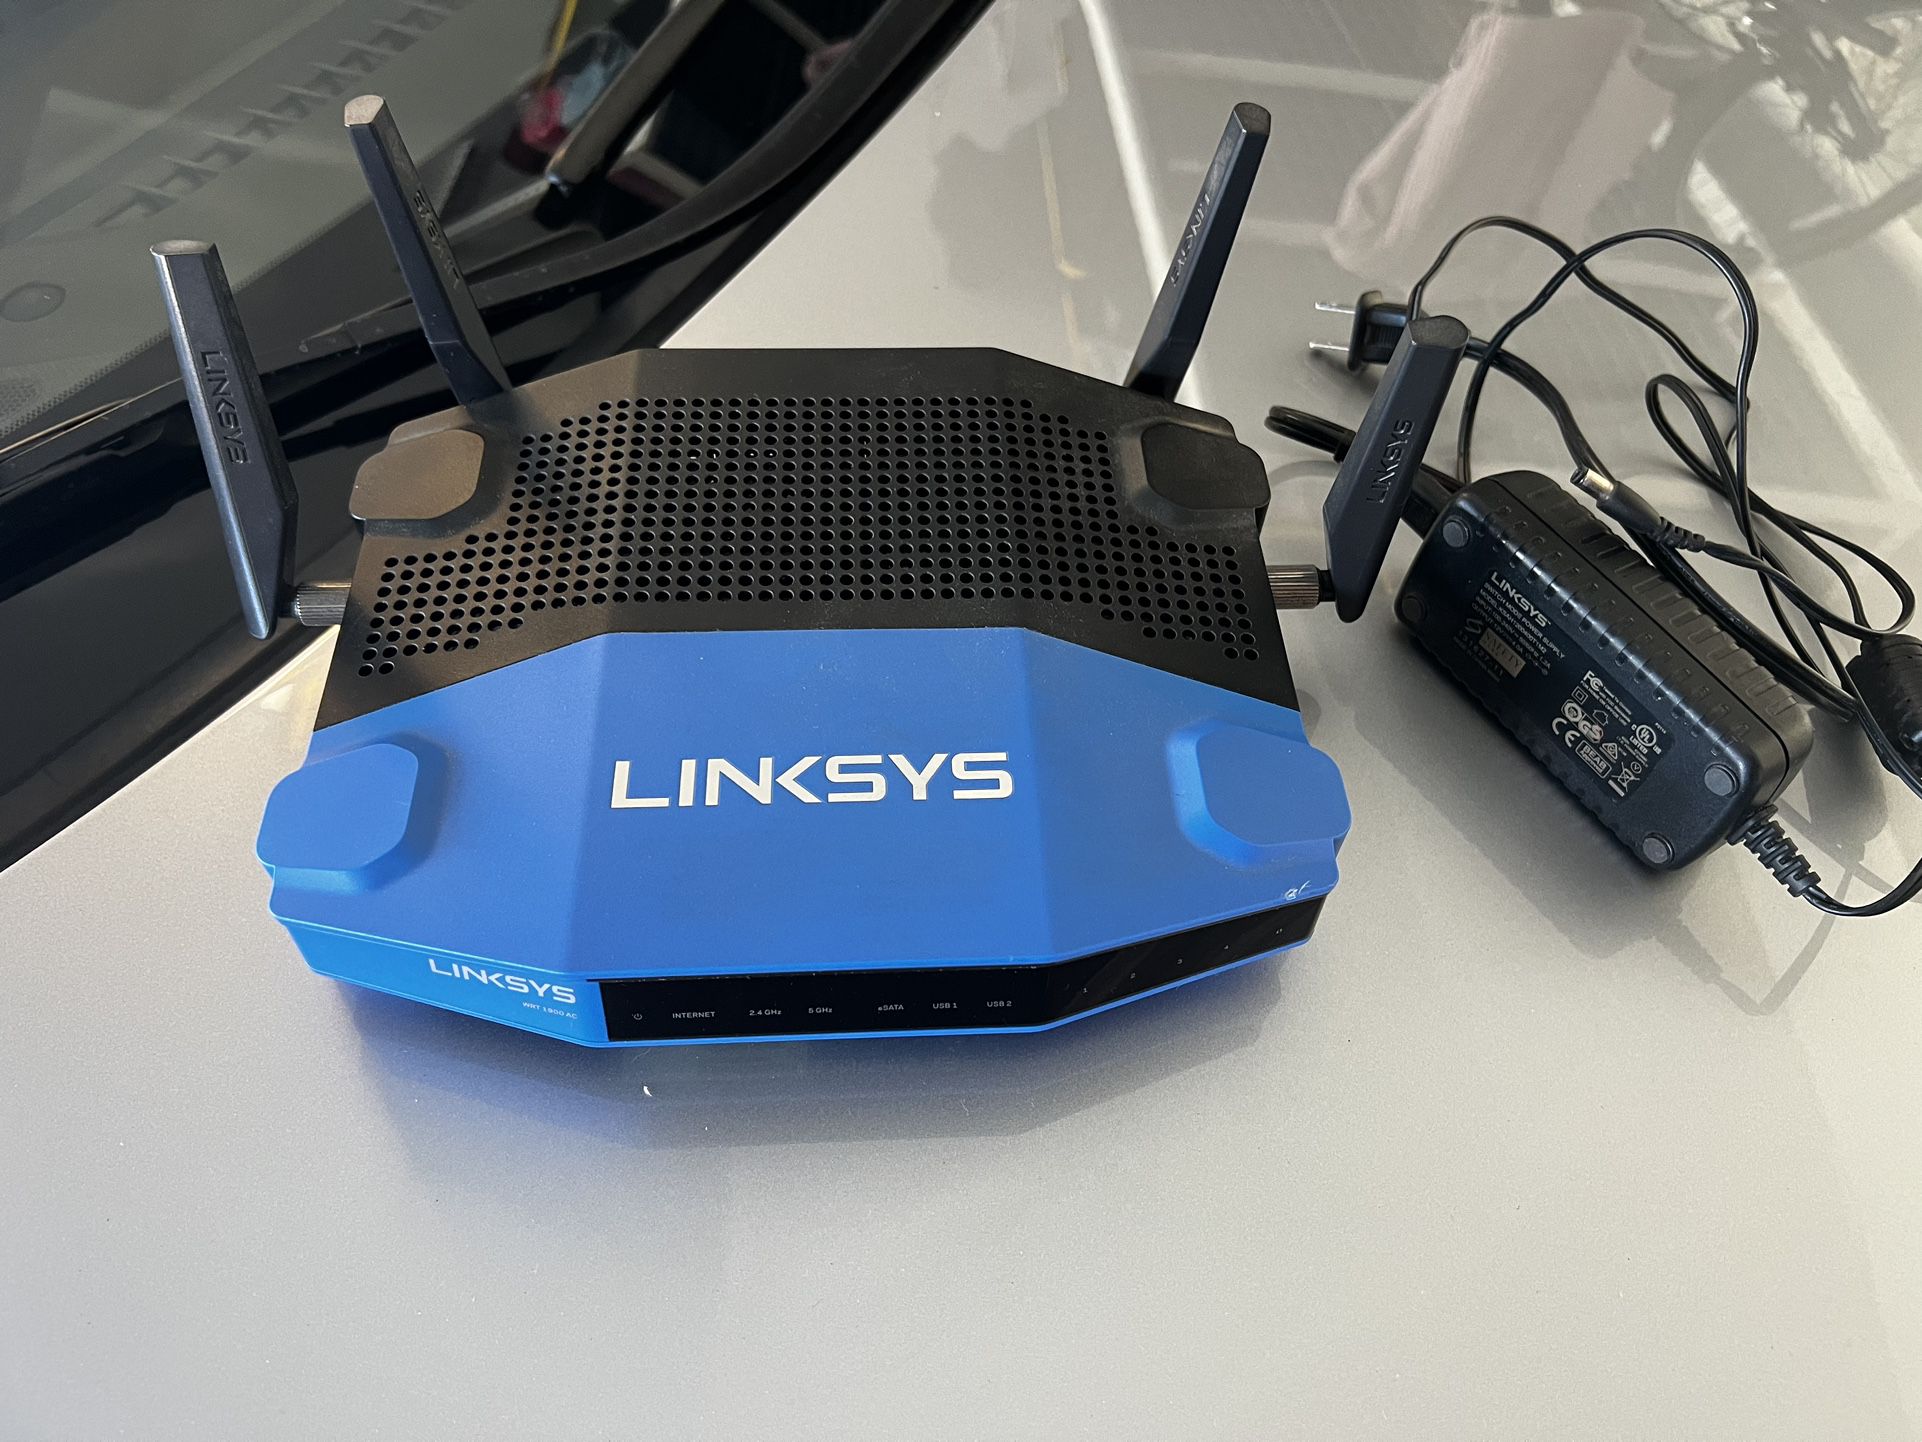 Linksys WRT 1900AC Wireless Router $25.00